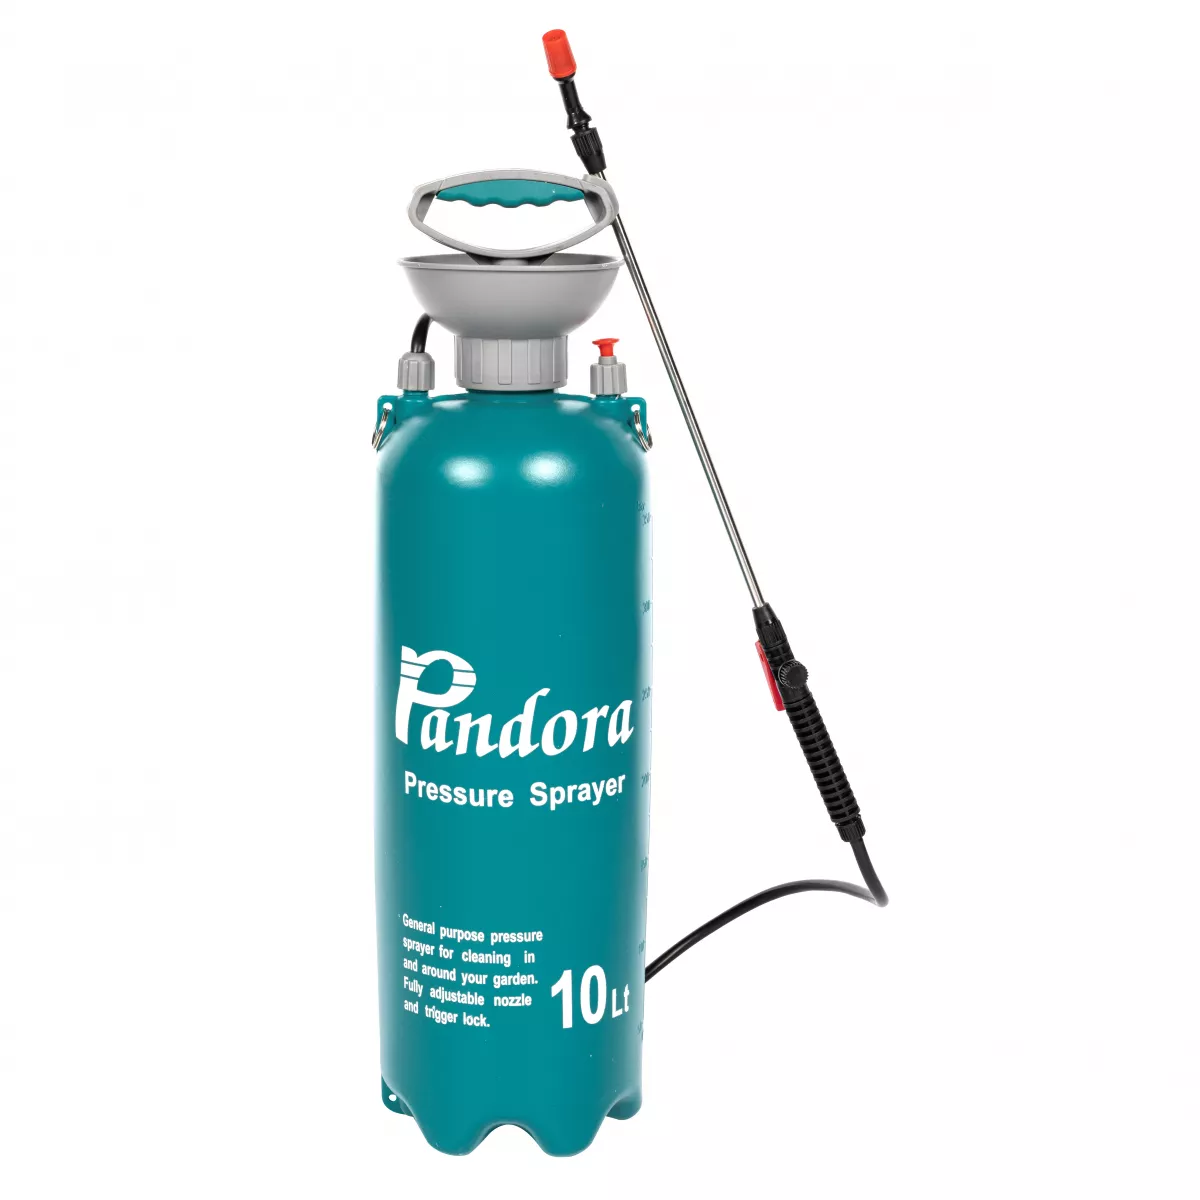 Pompa stropit manuala 10L Pandora, [],bricolajmarket.ro